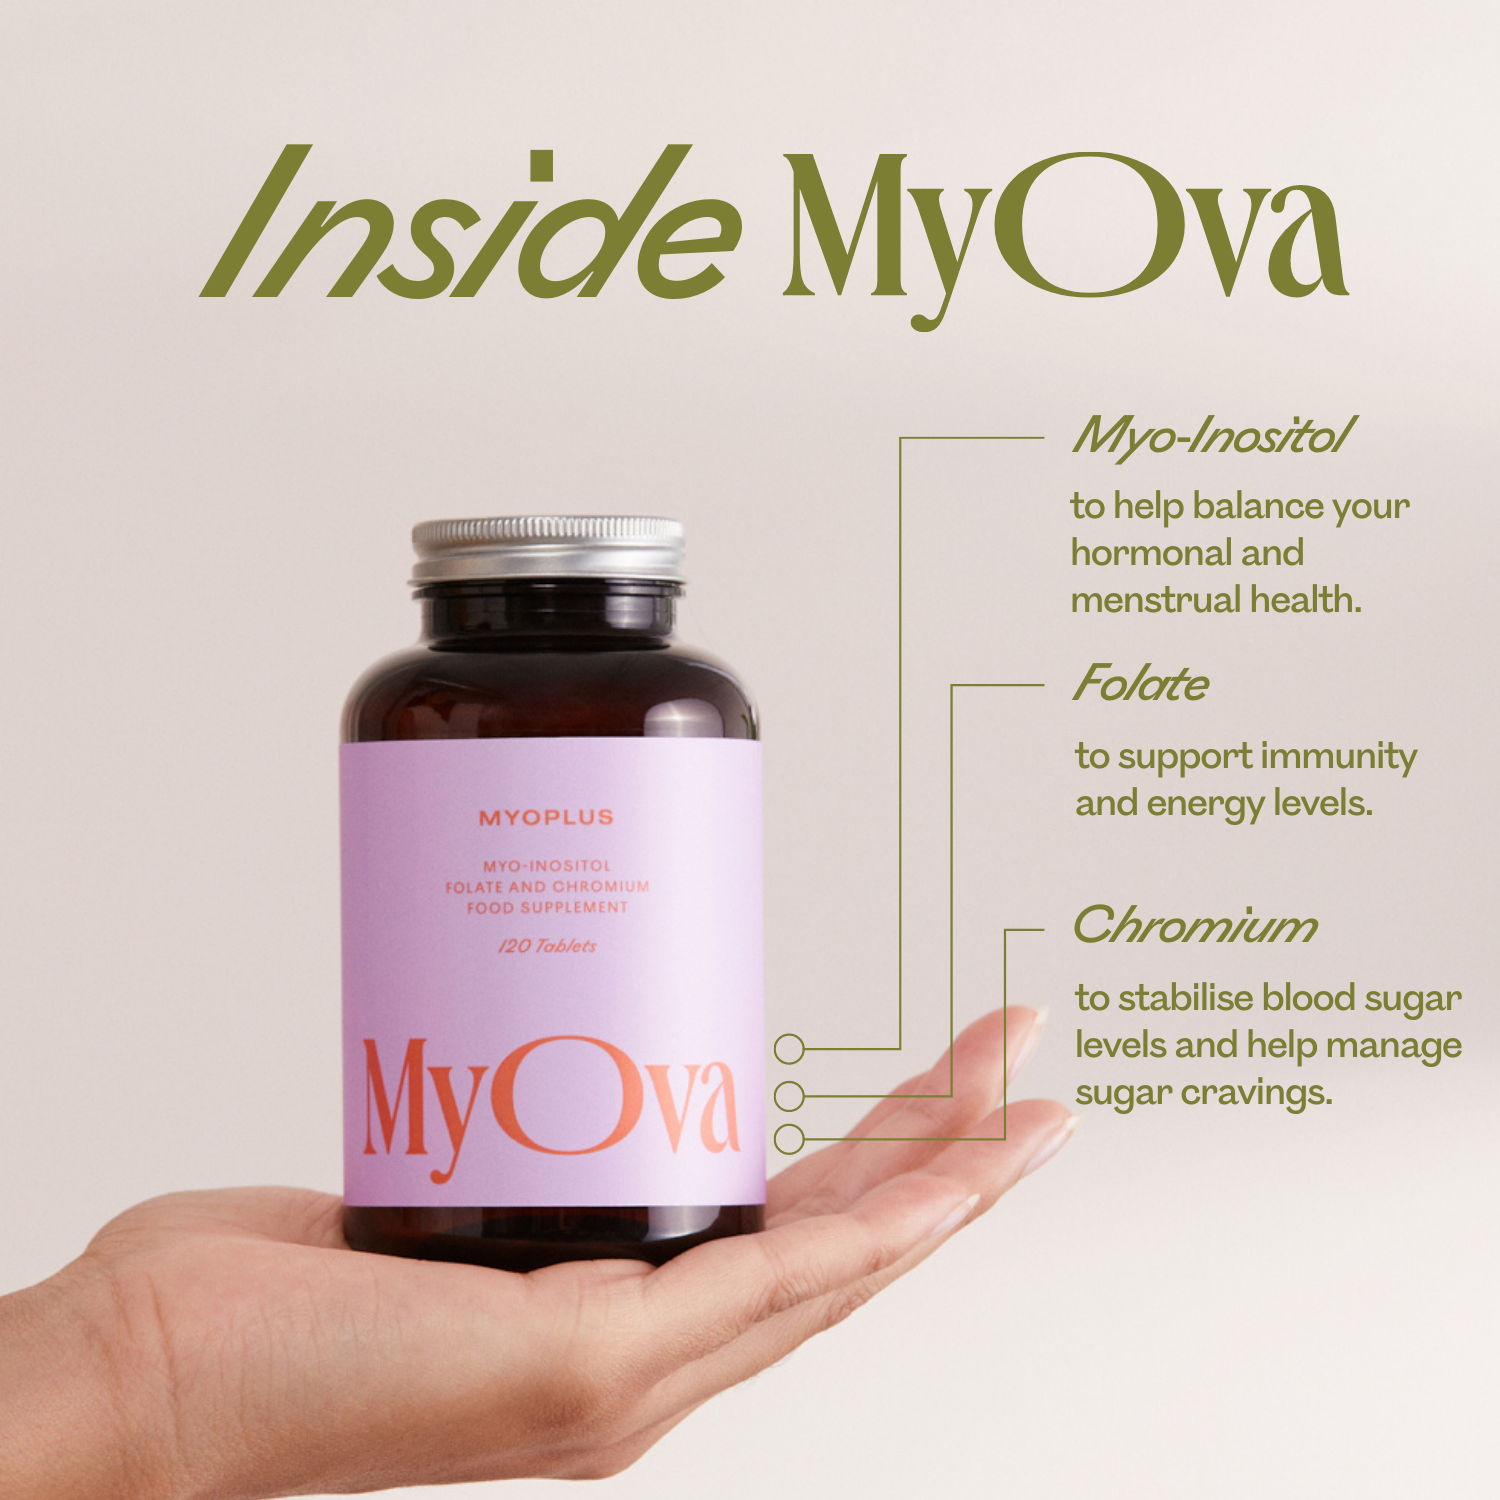 MyOva Myoplus with Myo-Inositol, Folate and Chromium